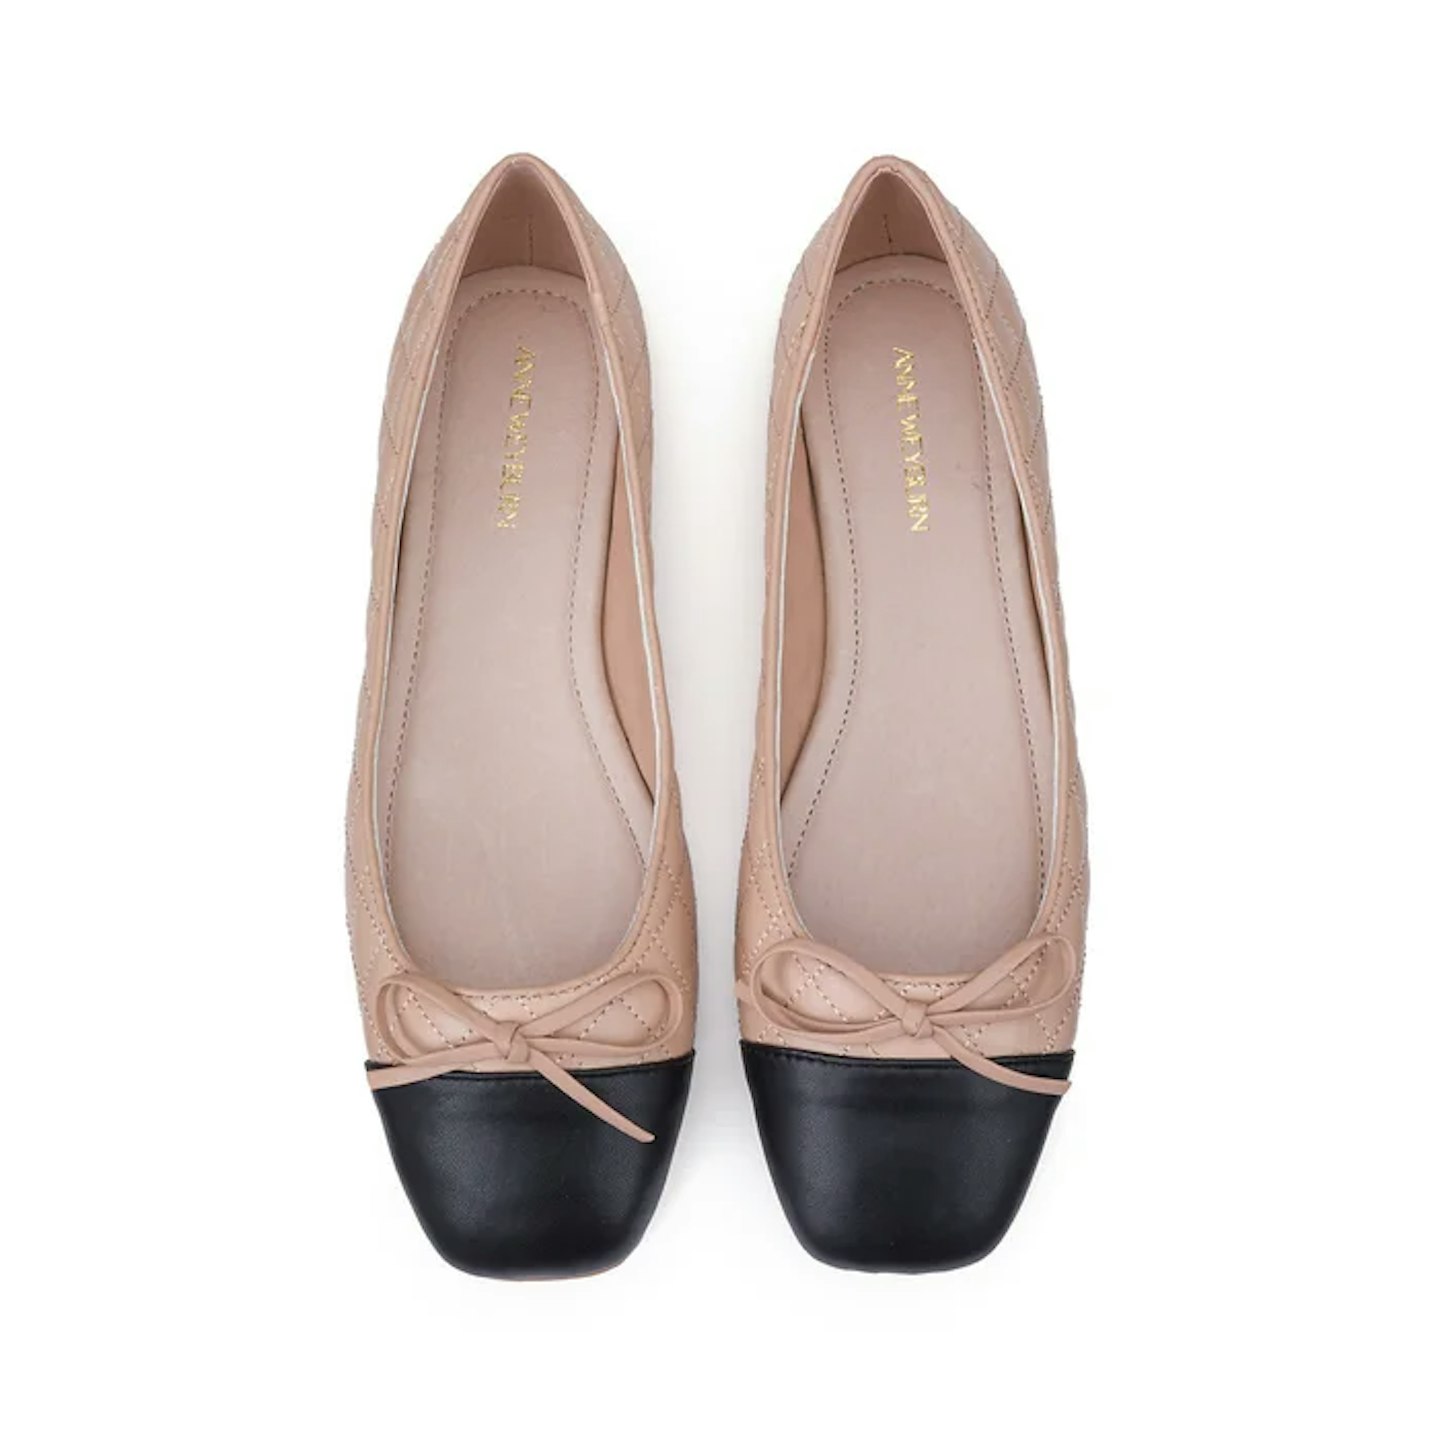 The Best Cap Toe Ballet Flats (Chanel Lookalikes!)